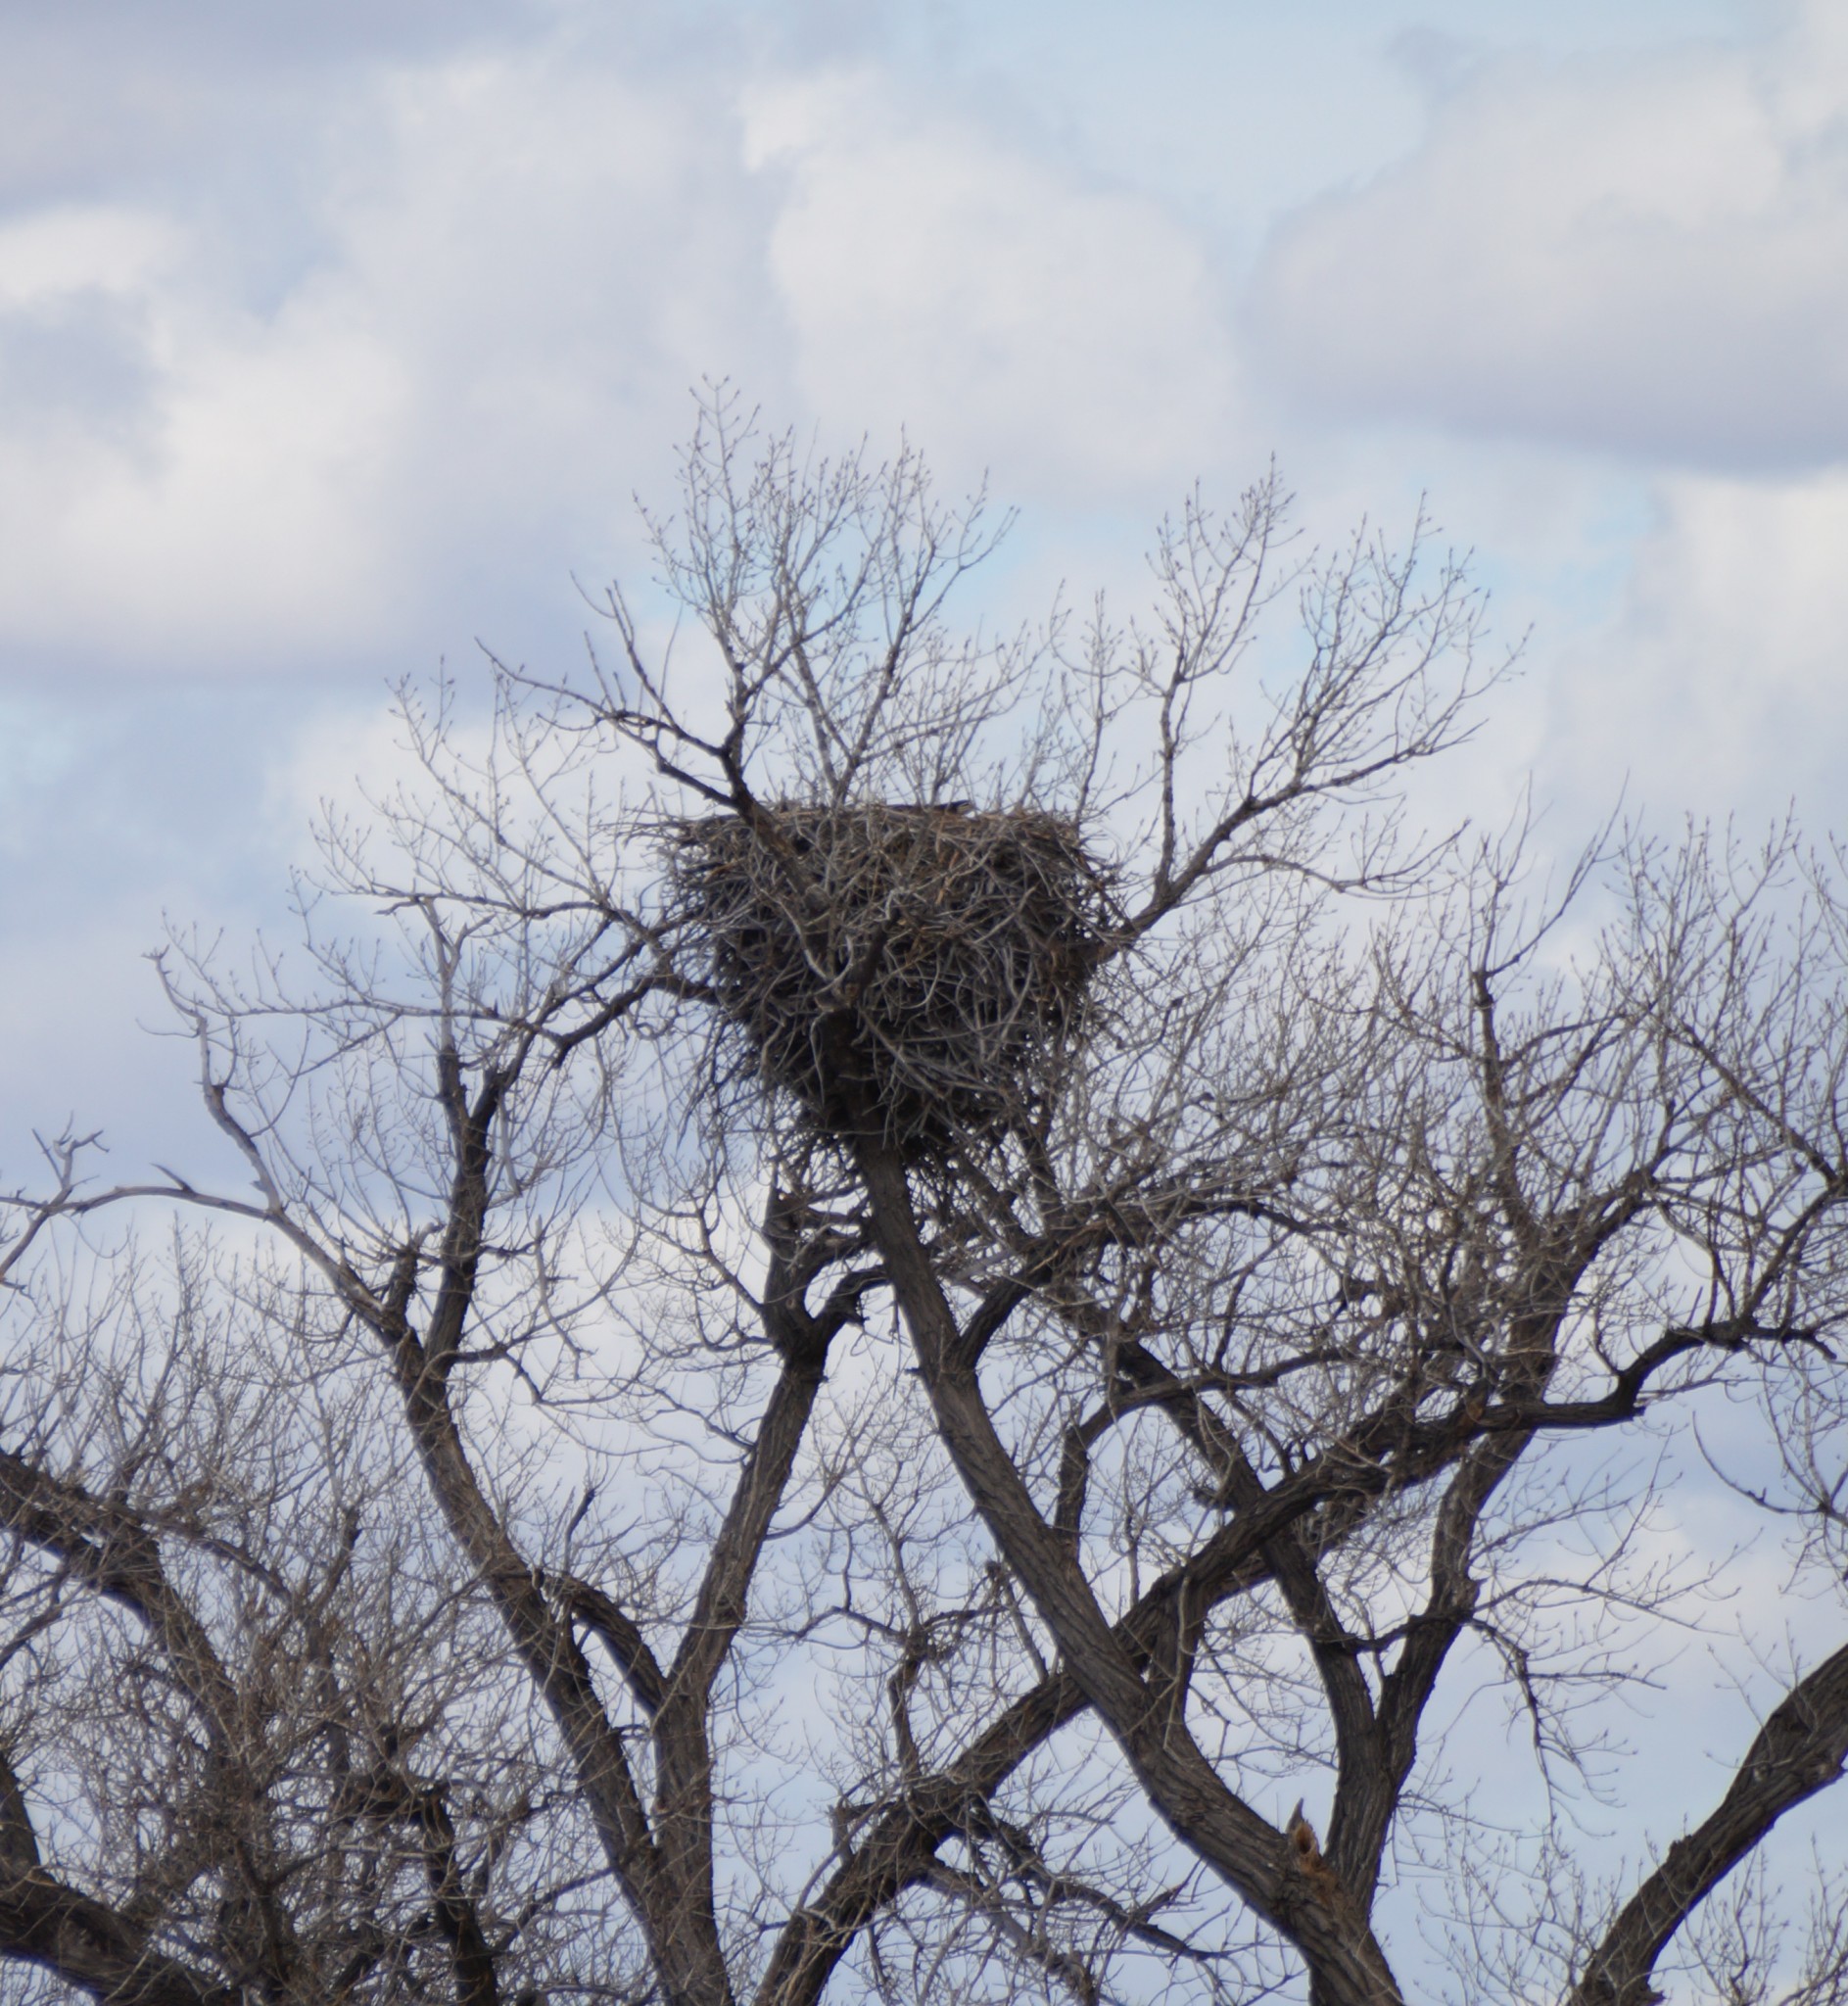 Bald Eagle nest